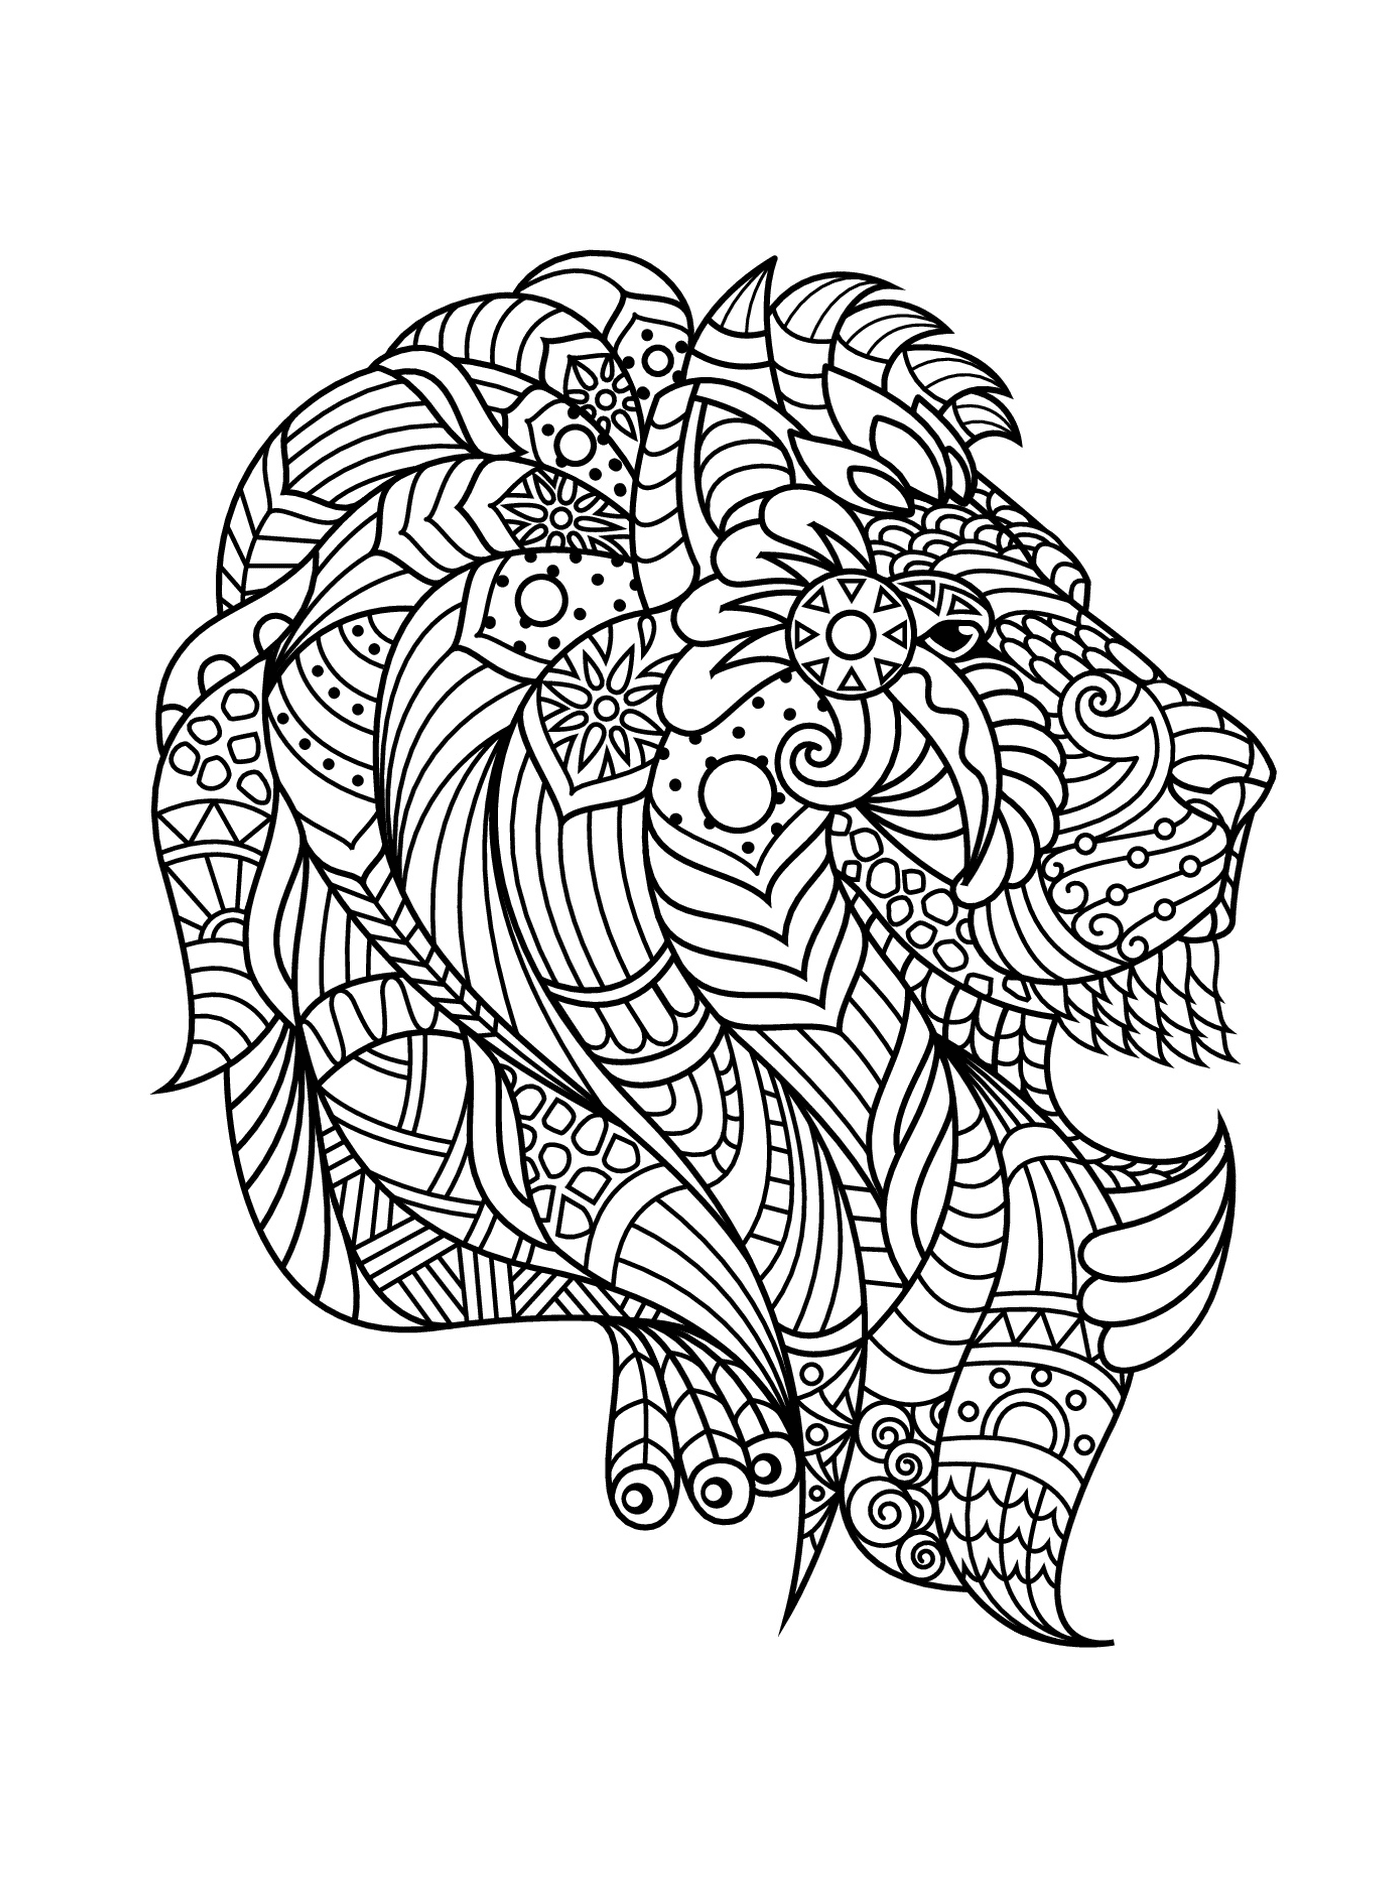  Lion adult complex zentangle 